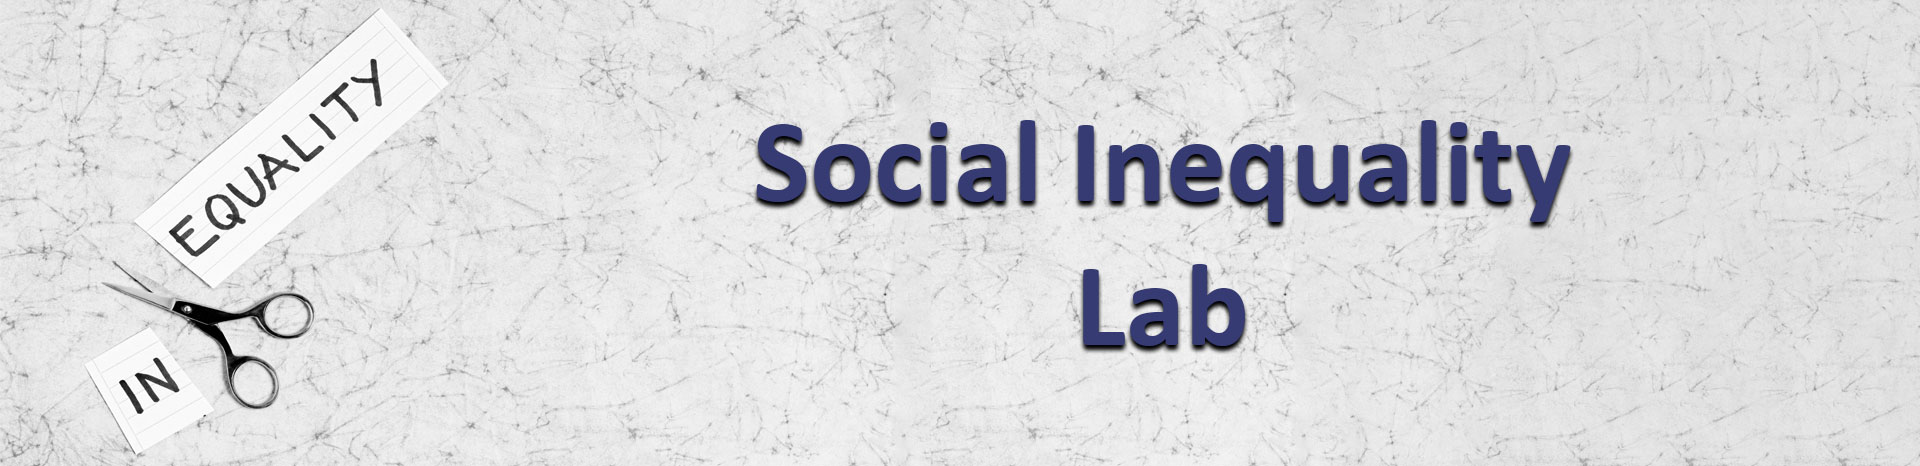 Social Inequality Lab